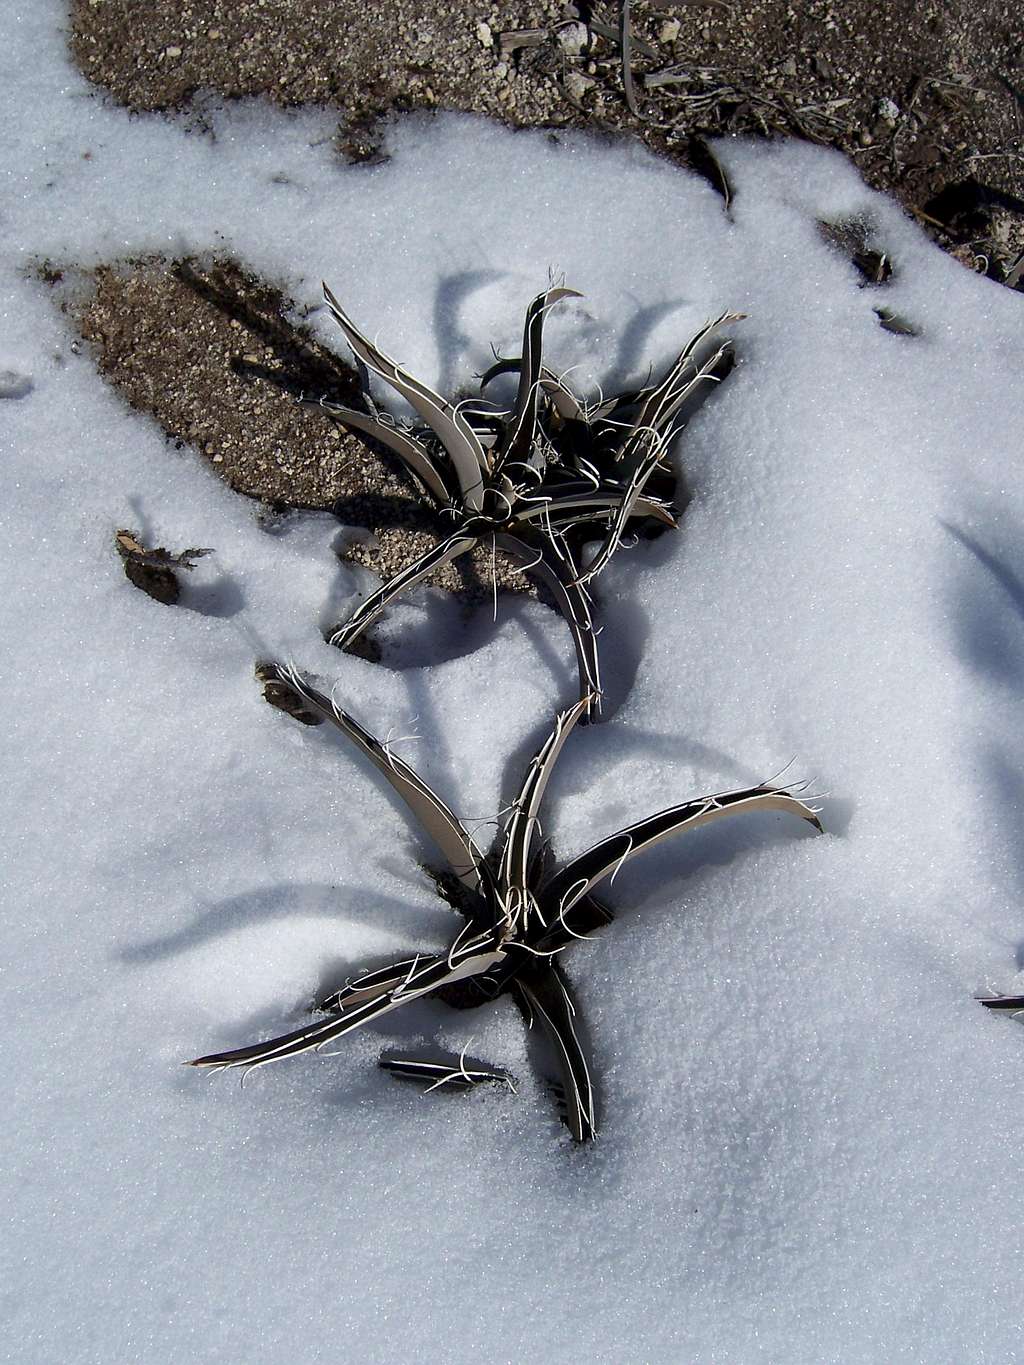 Snowy Yuccas